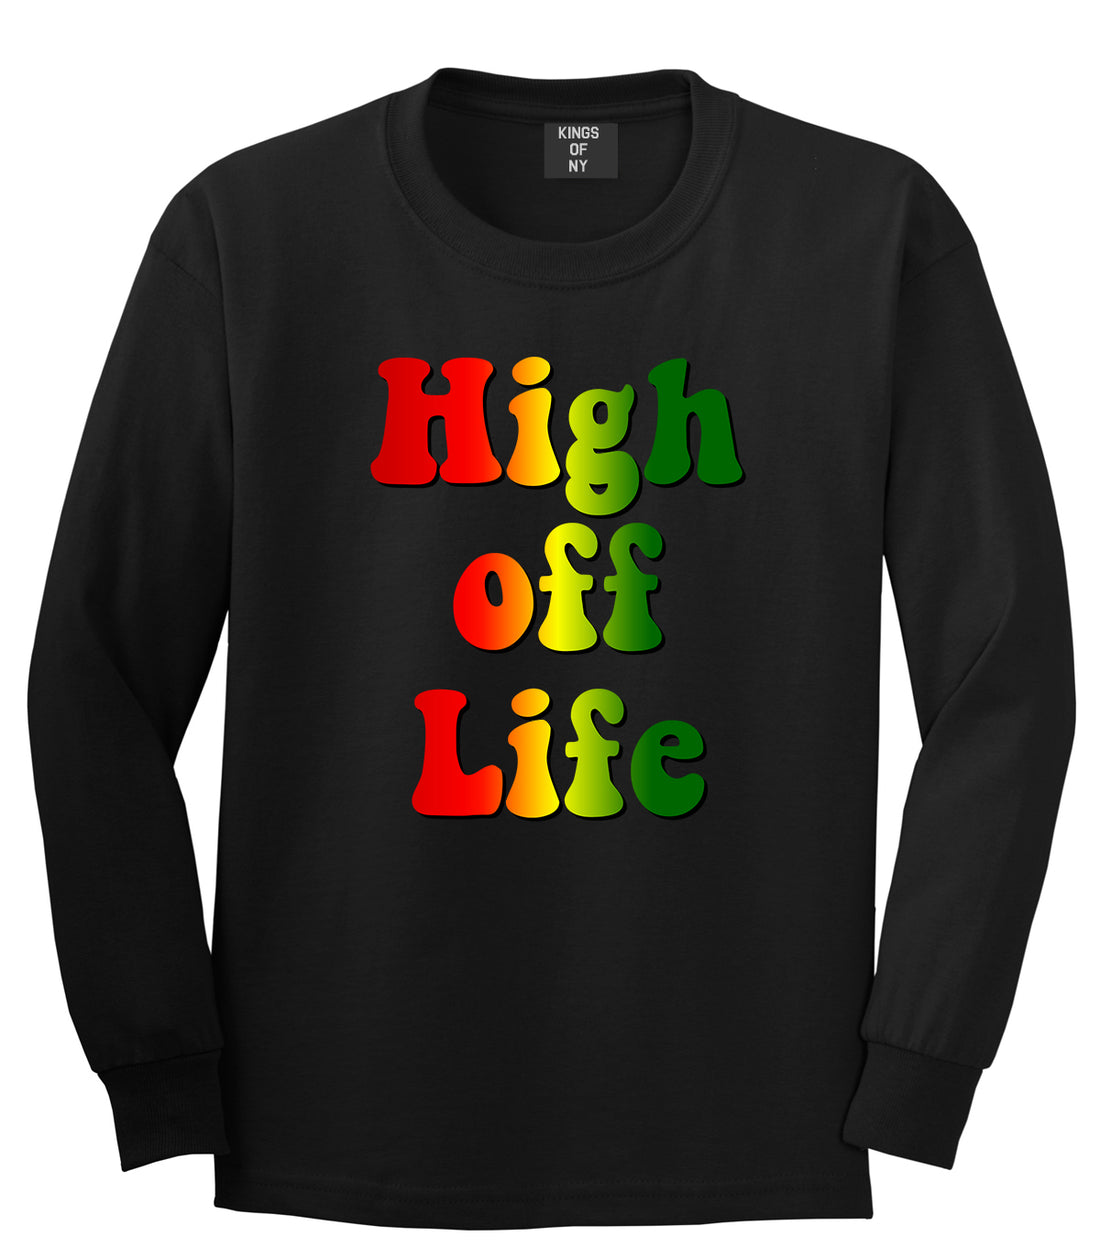 High Off Life Mens Long Sleeve T-Shirt Black by Kings Of NY